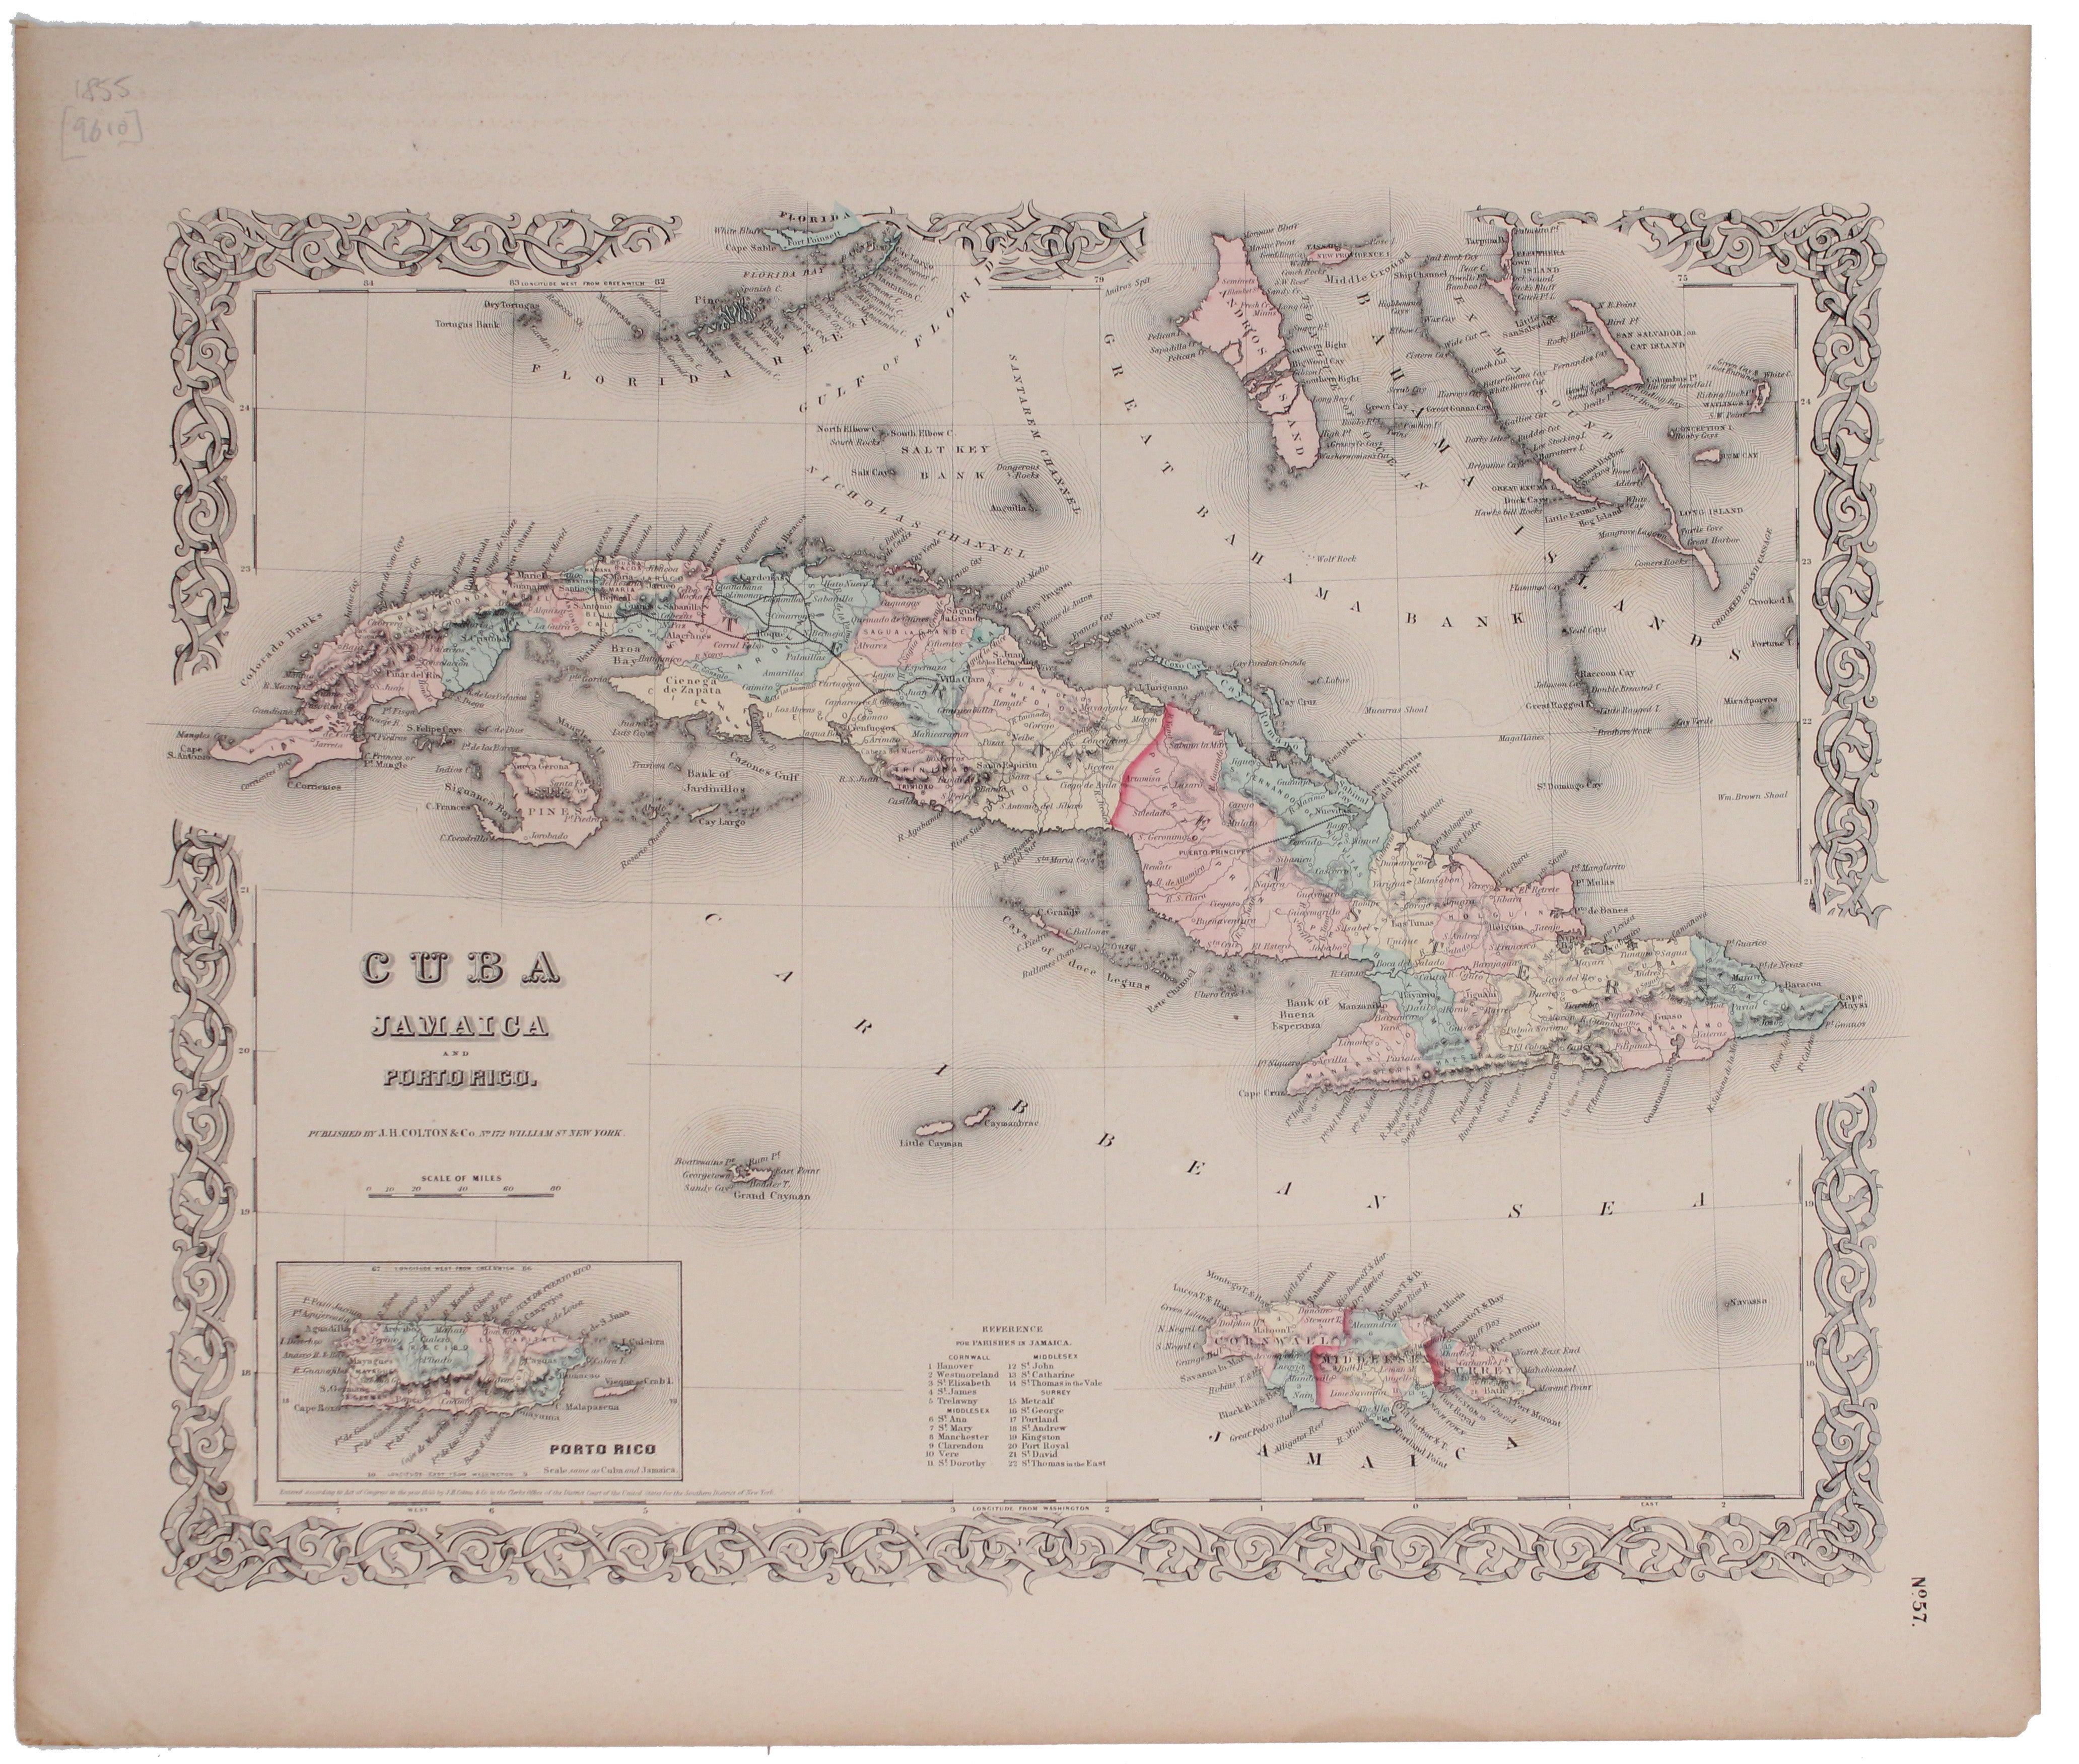 Colton's Map of Cuba